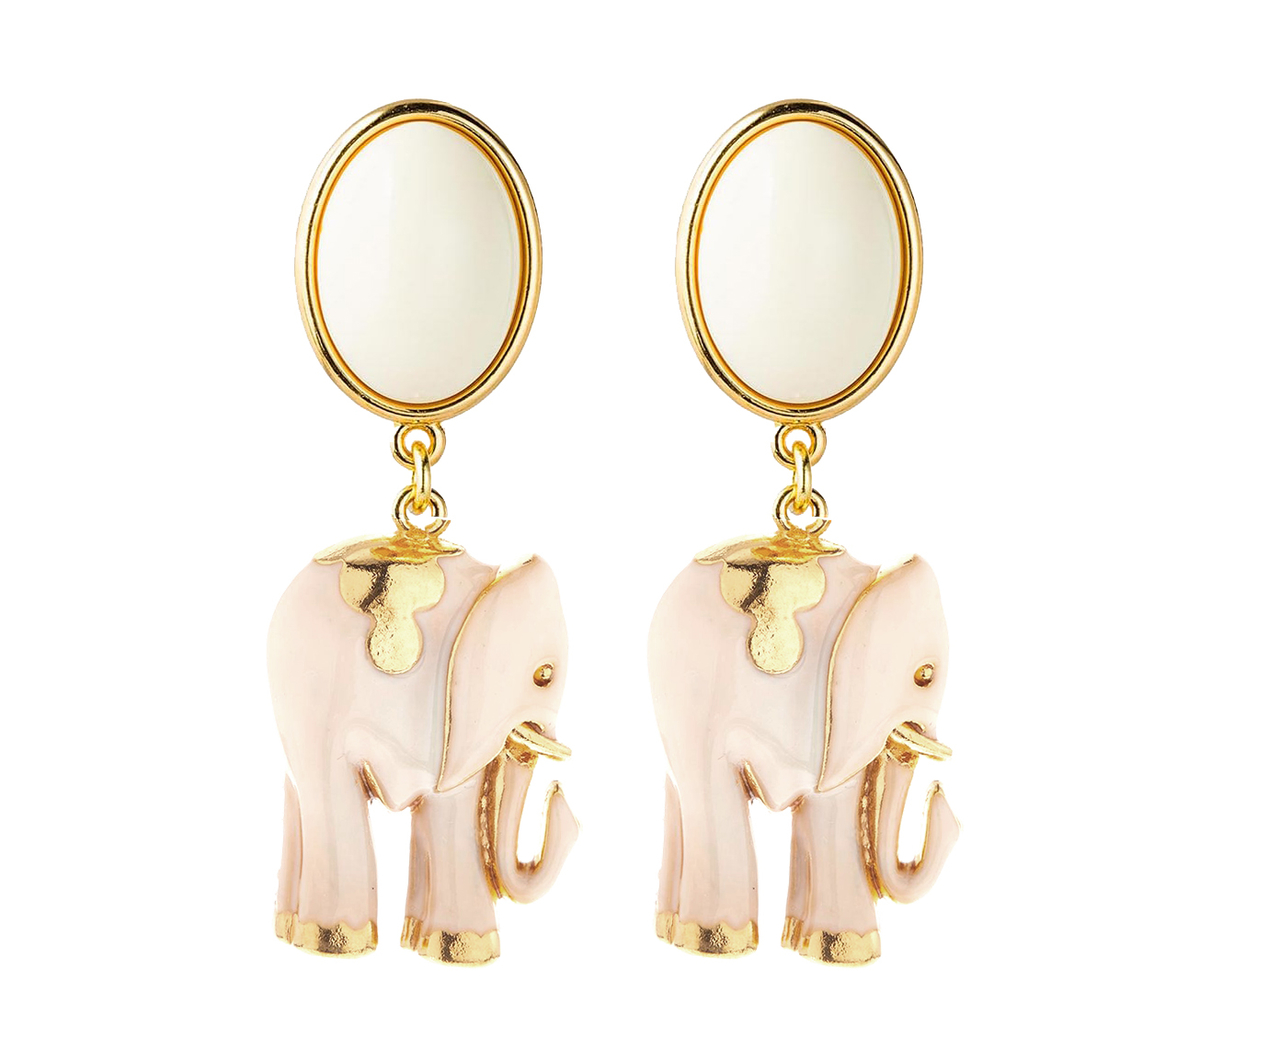 Ohrstecker oval cremeweiß mit Elefant in transparent-beige - justwin